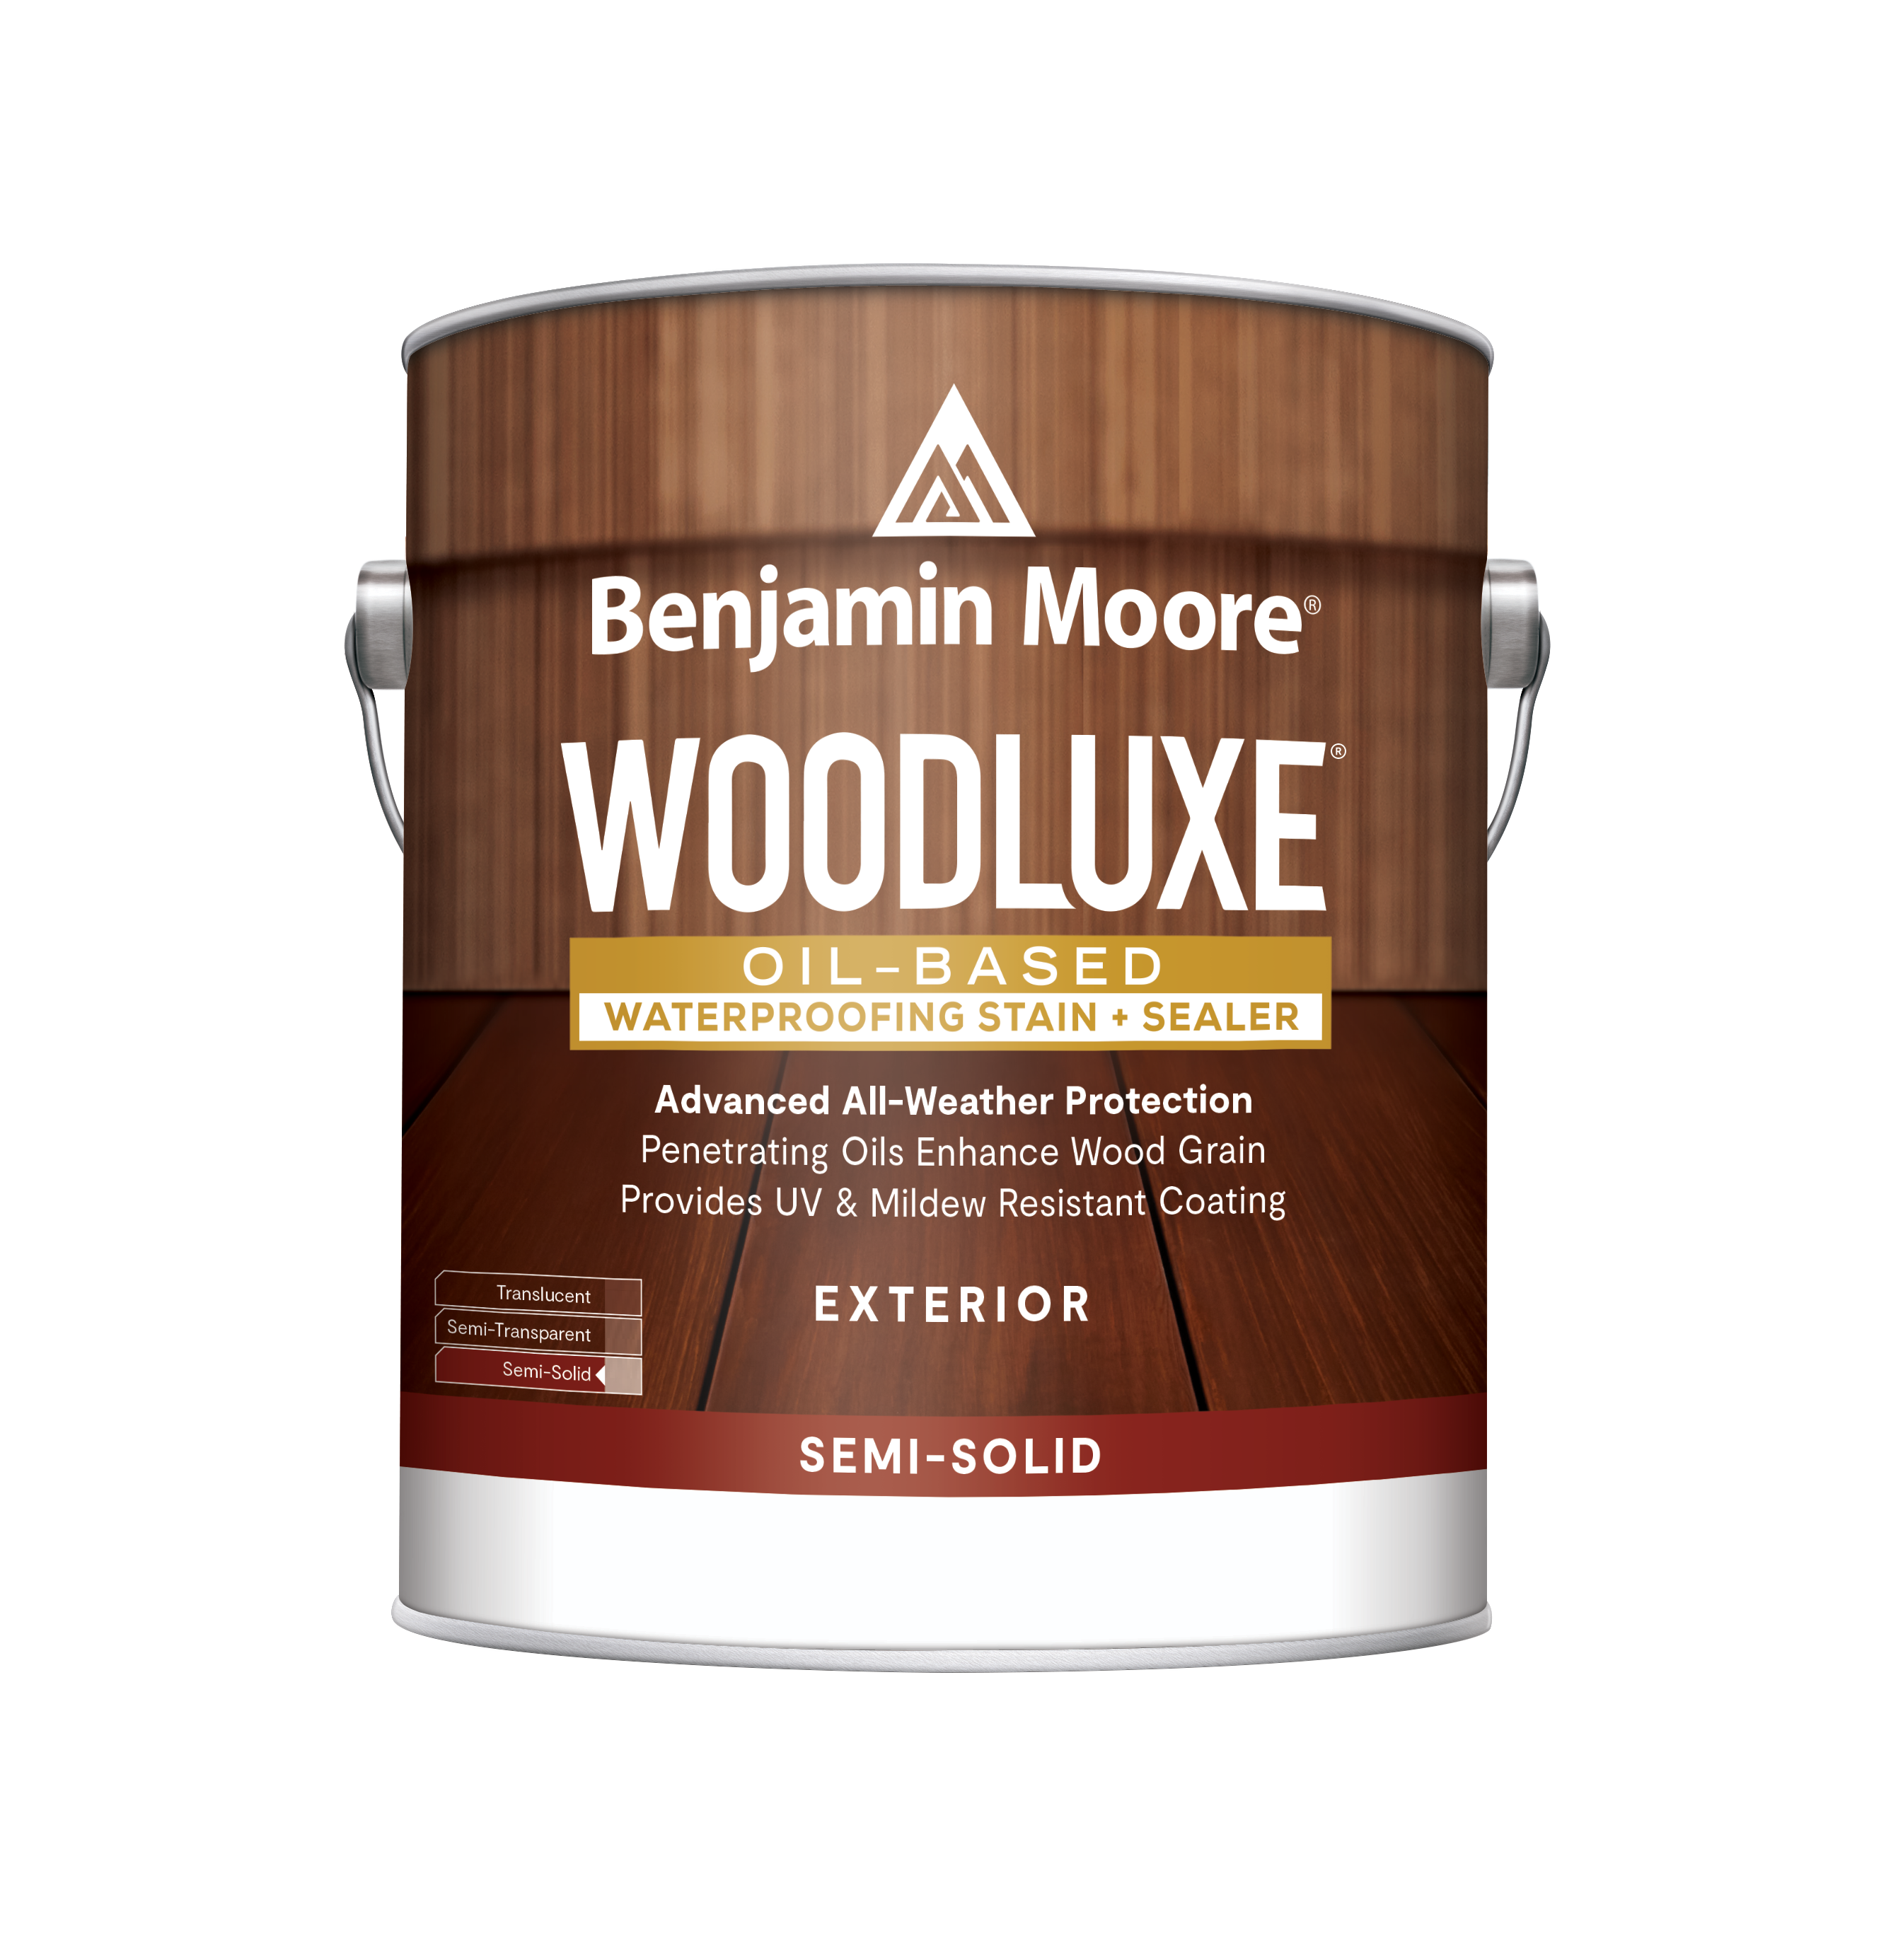 Woodluxe® Oil-Based Waterproofing Stain + Sealer - Semi-Solid 0593